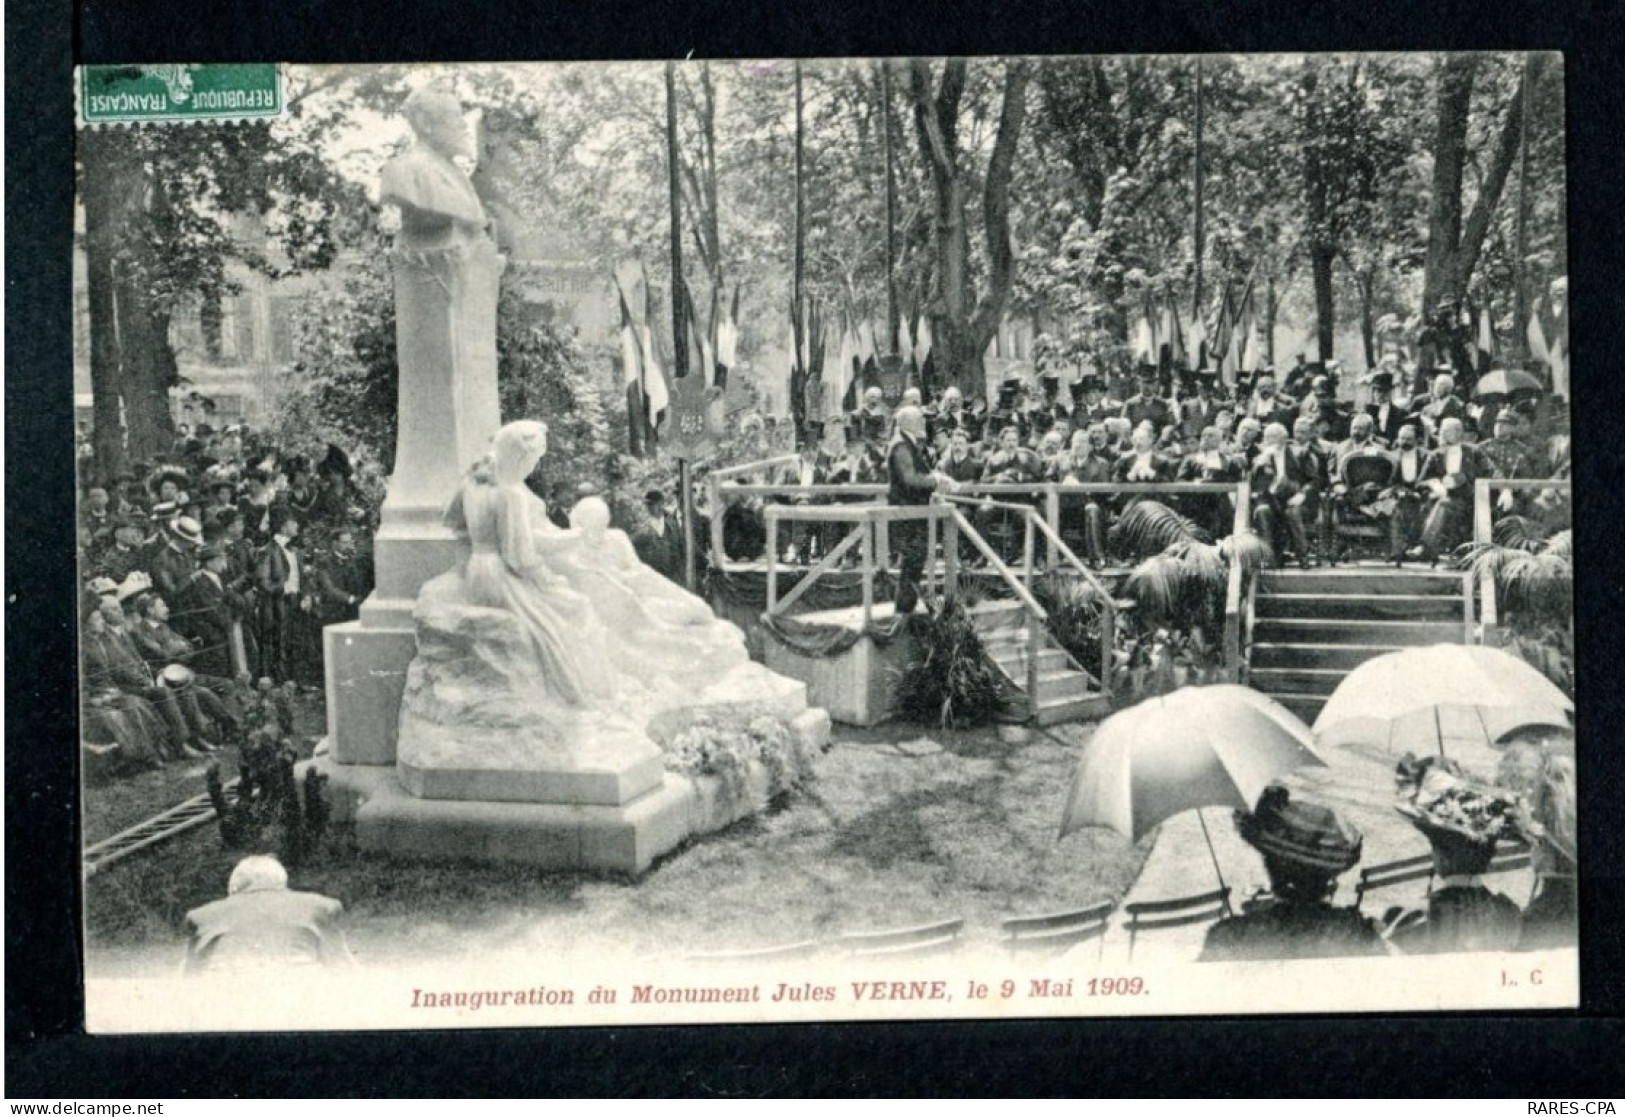 80 AMIENS - INAUGURATION DU MONUMENT JULES VERNES LE 9 MAI 1909 - Amiens